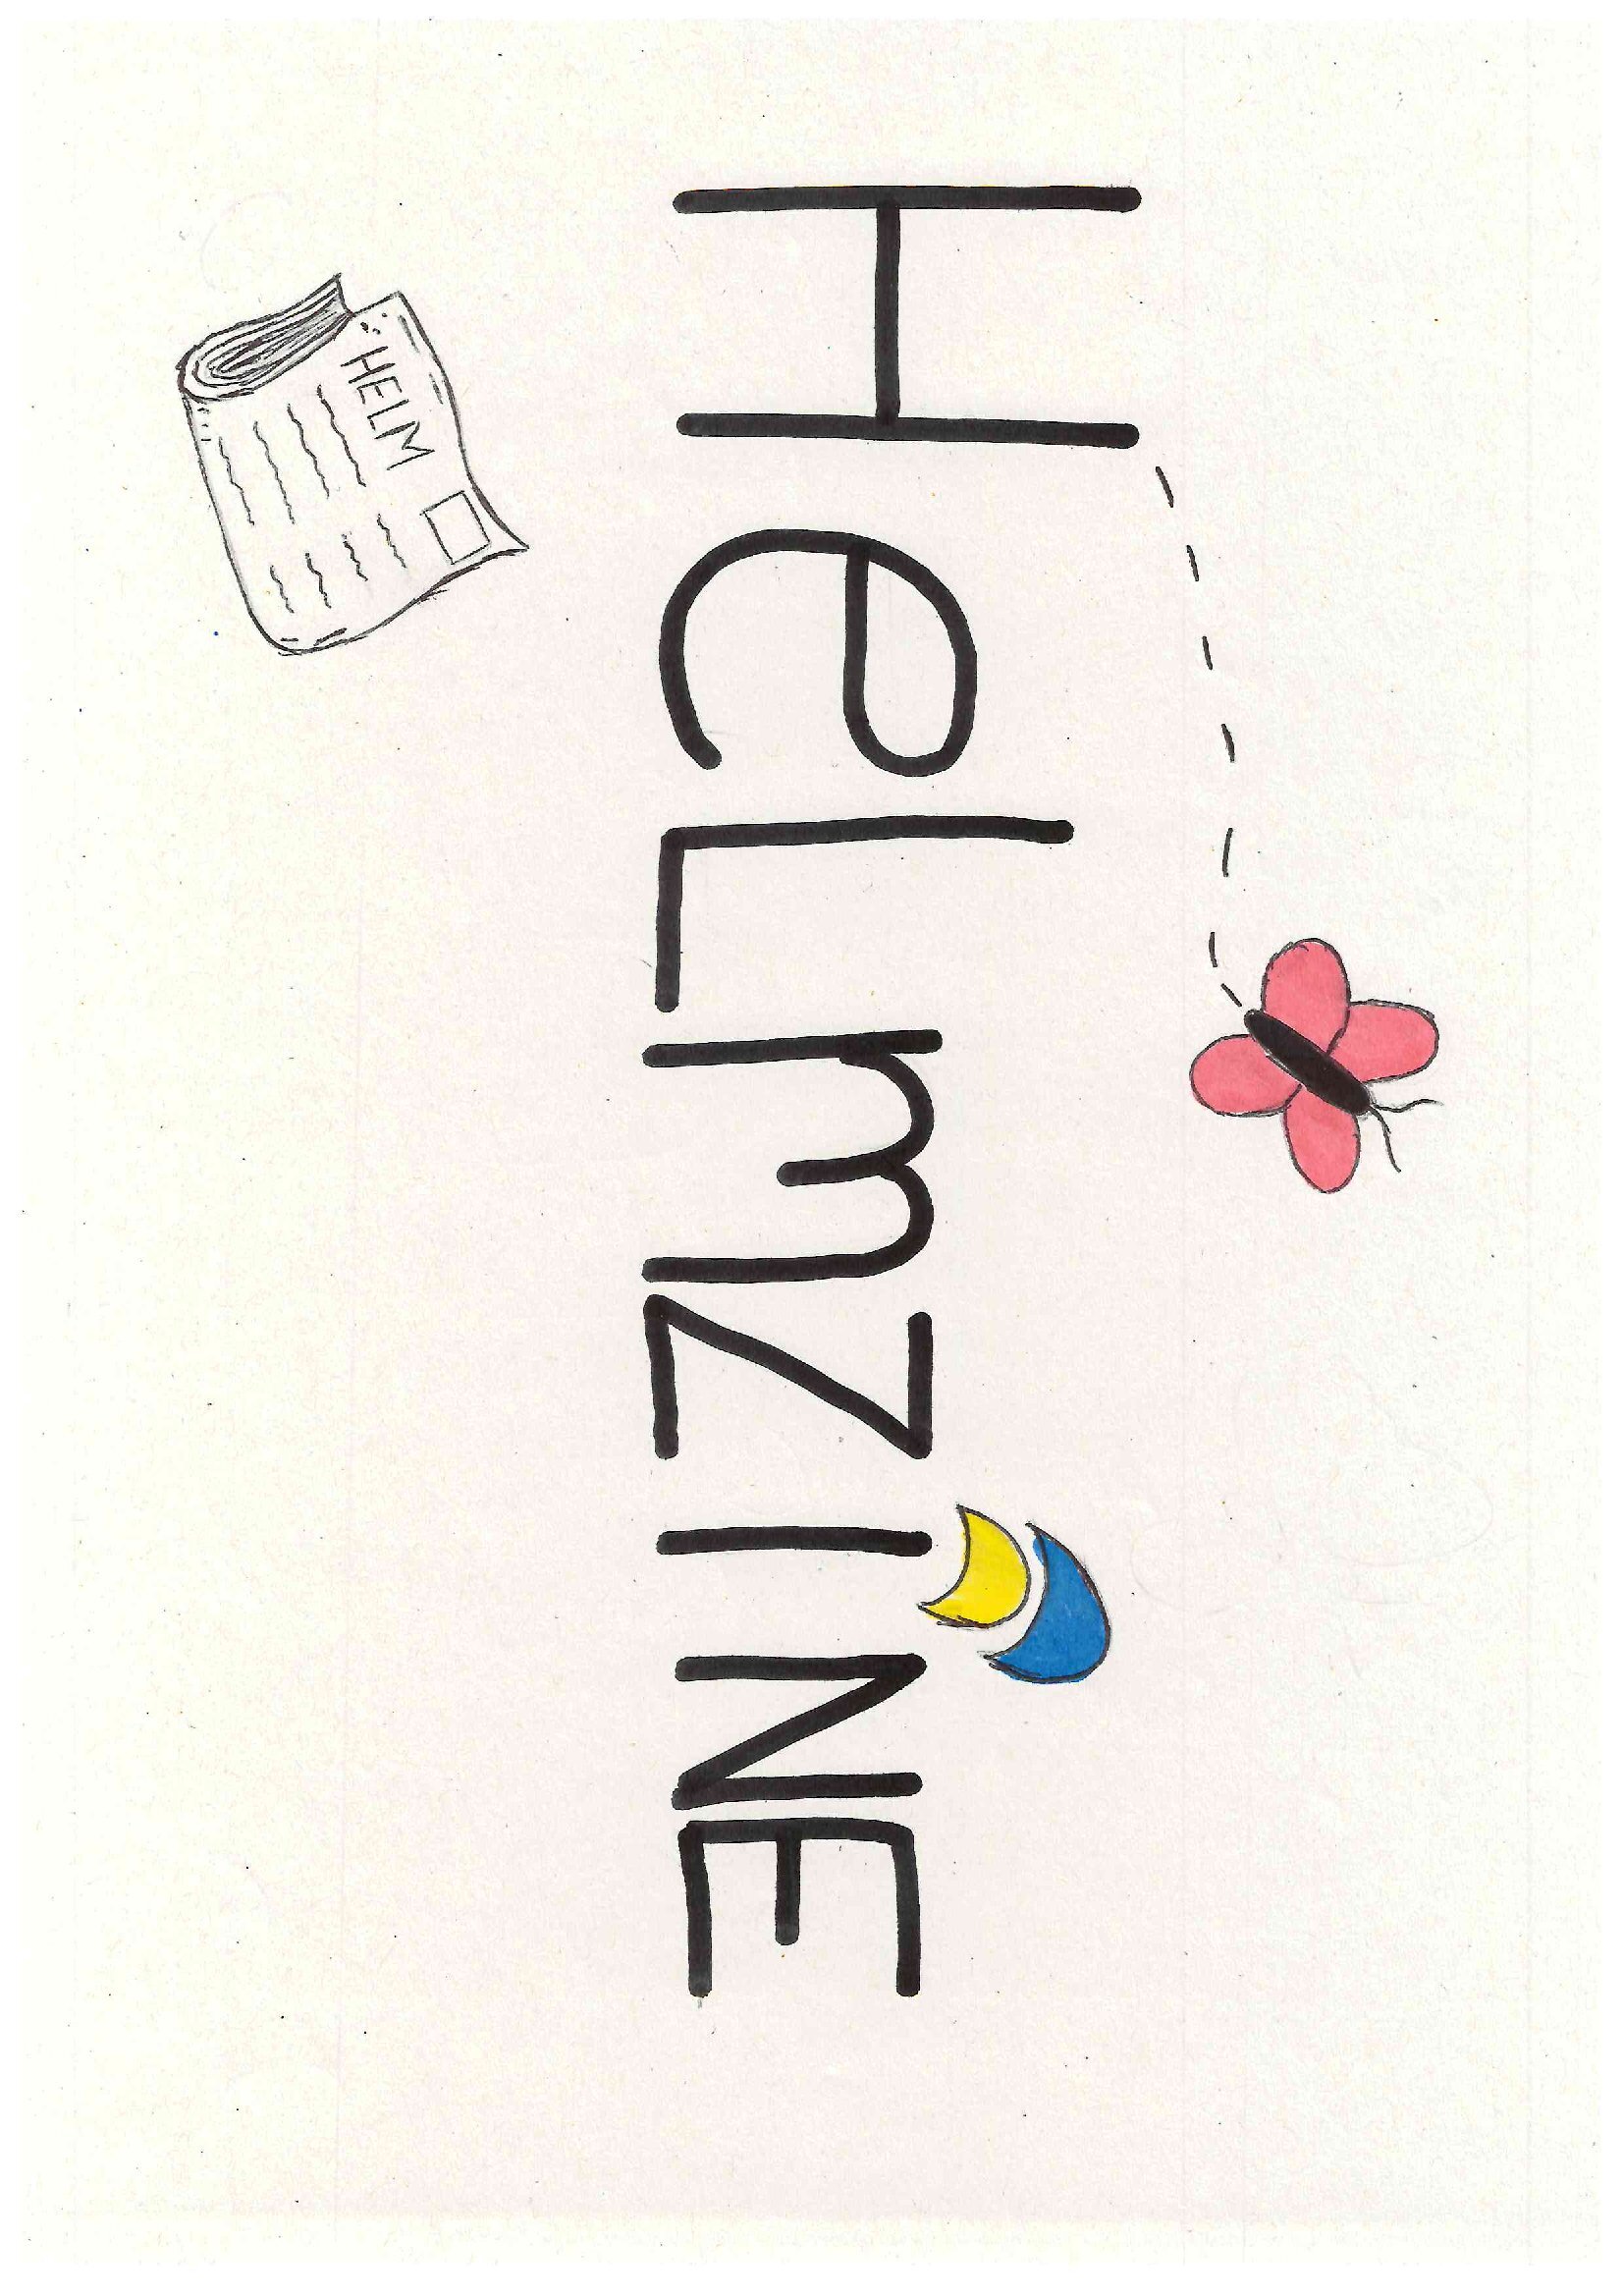 3rd Edition of HelmZine!